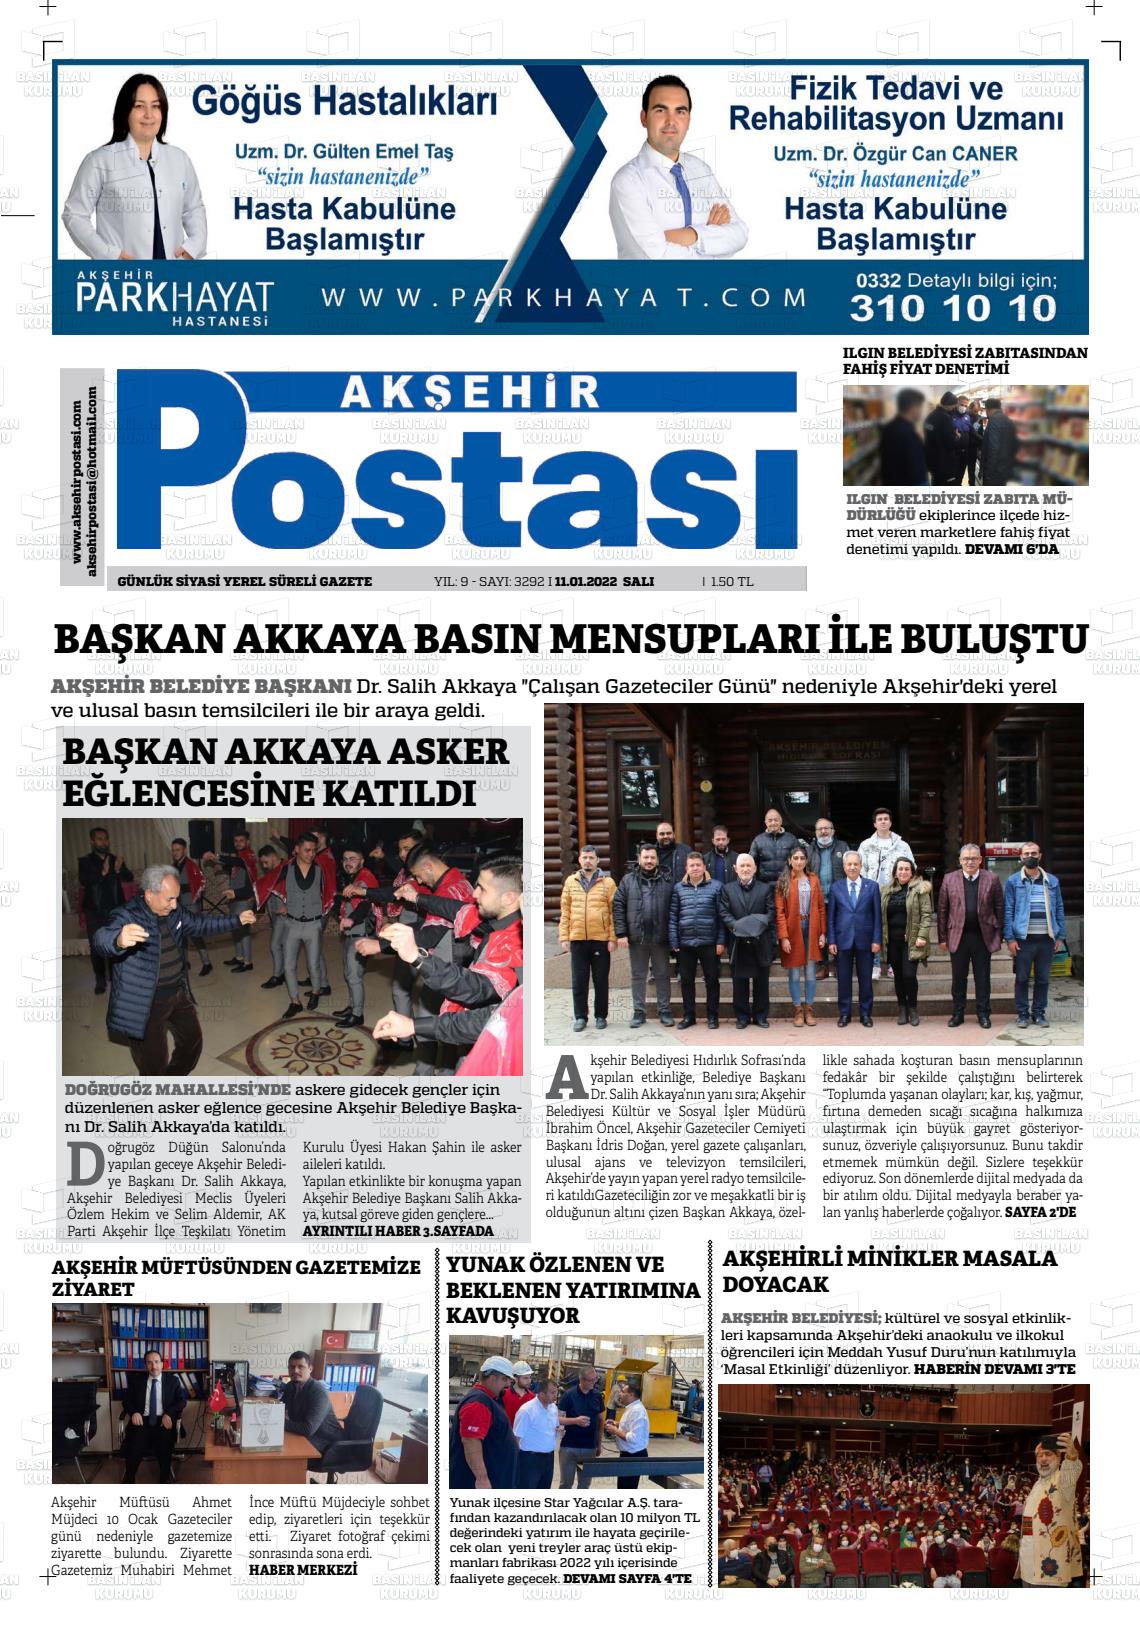 11 Ocak 2022 Akşehir Postasi Gazete Manşeti